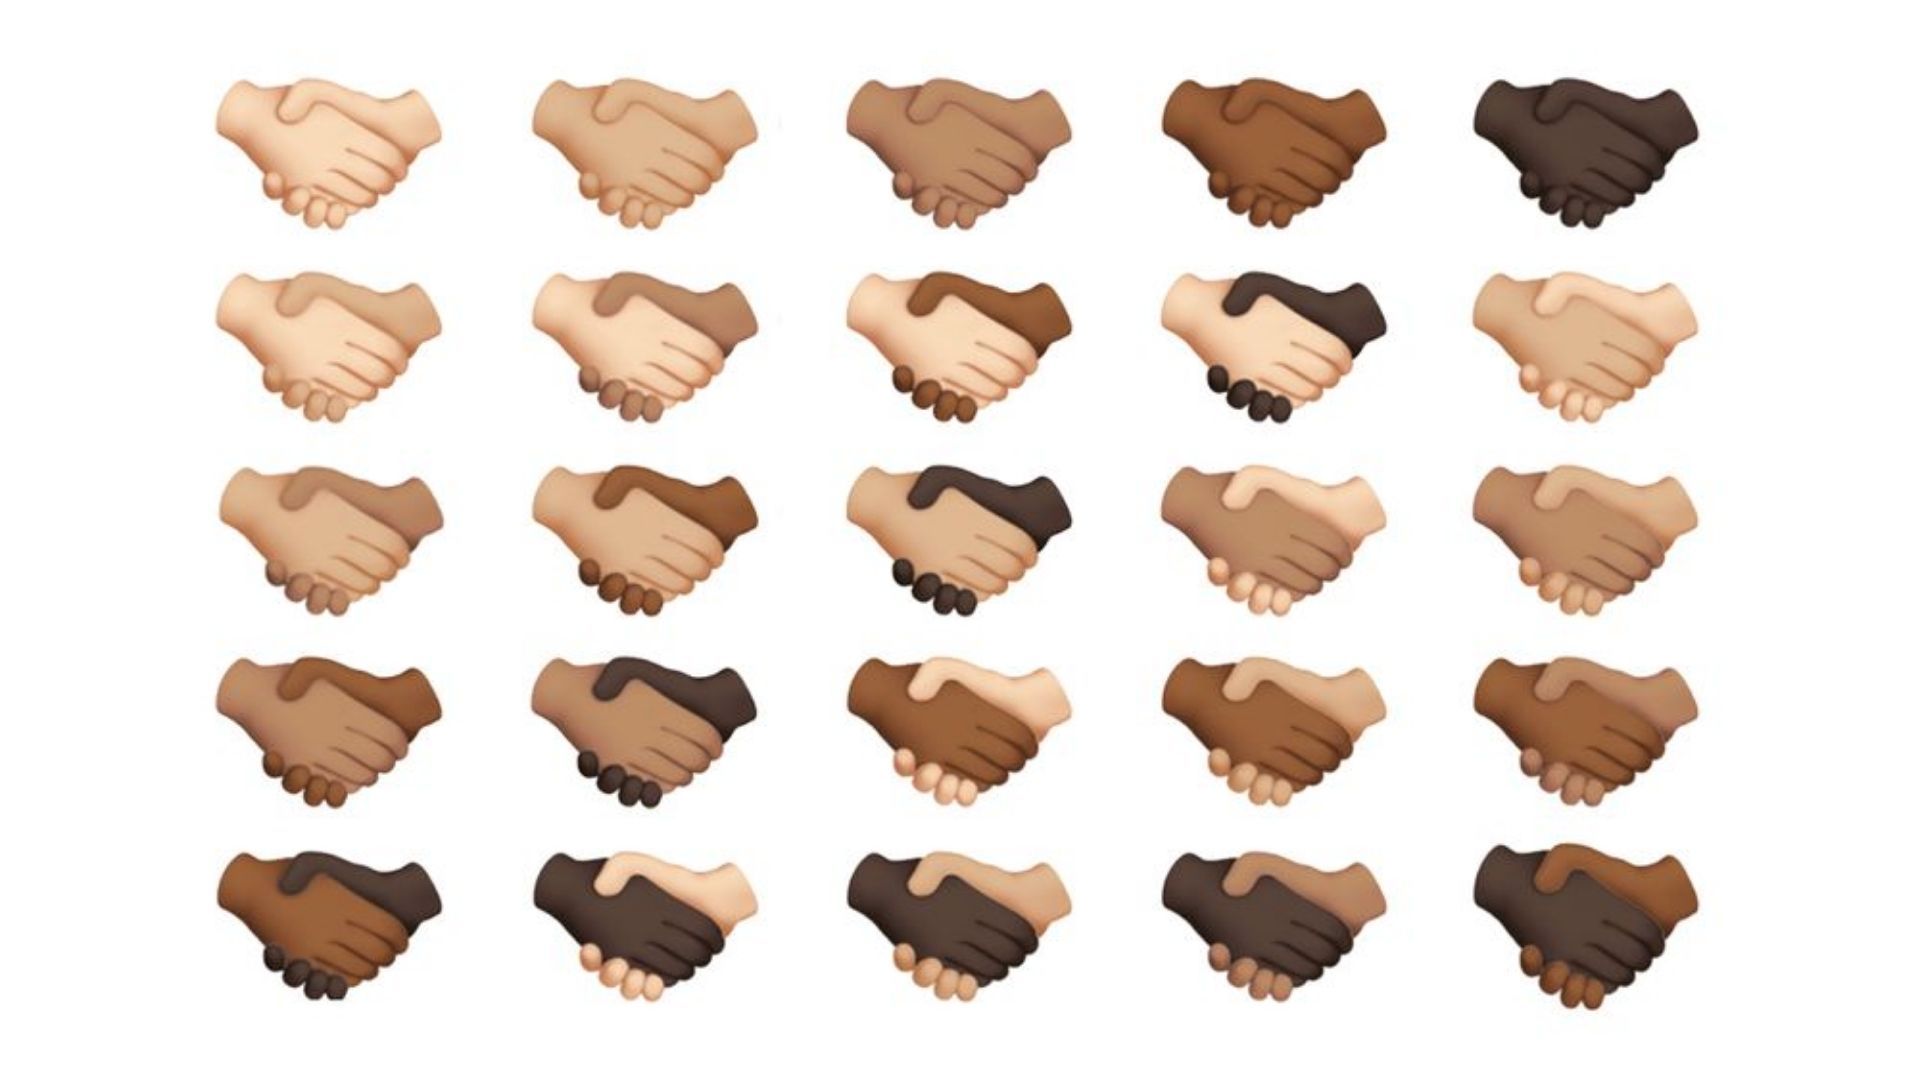 Skin tones for new emojis